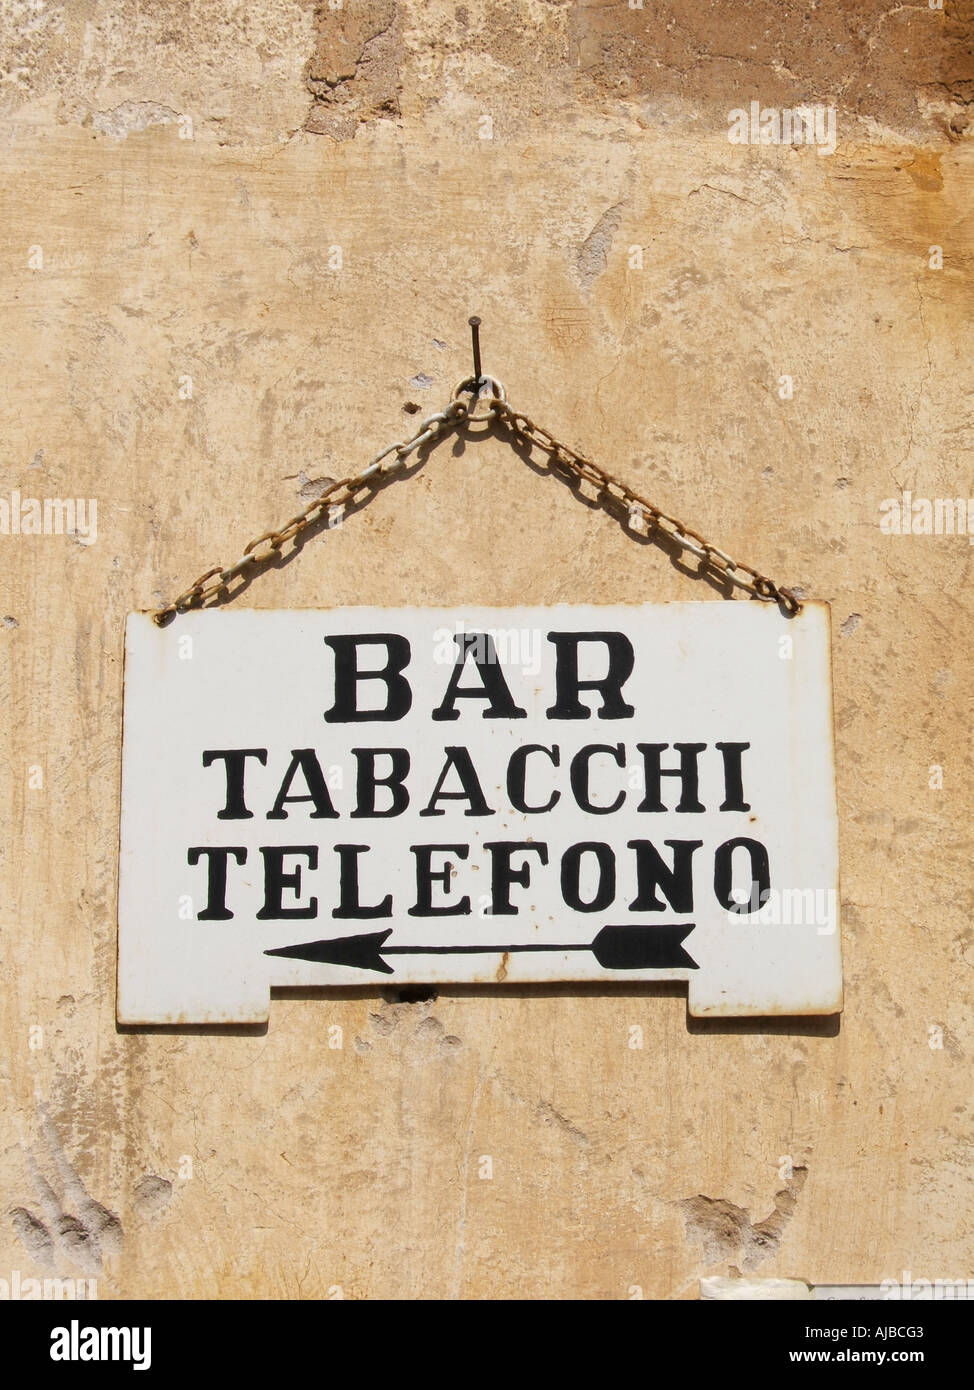 bar tabacchi telefono sign in italy Stock Photo